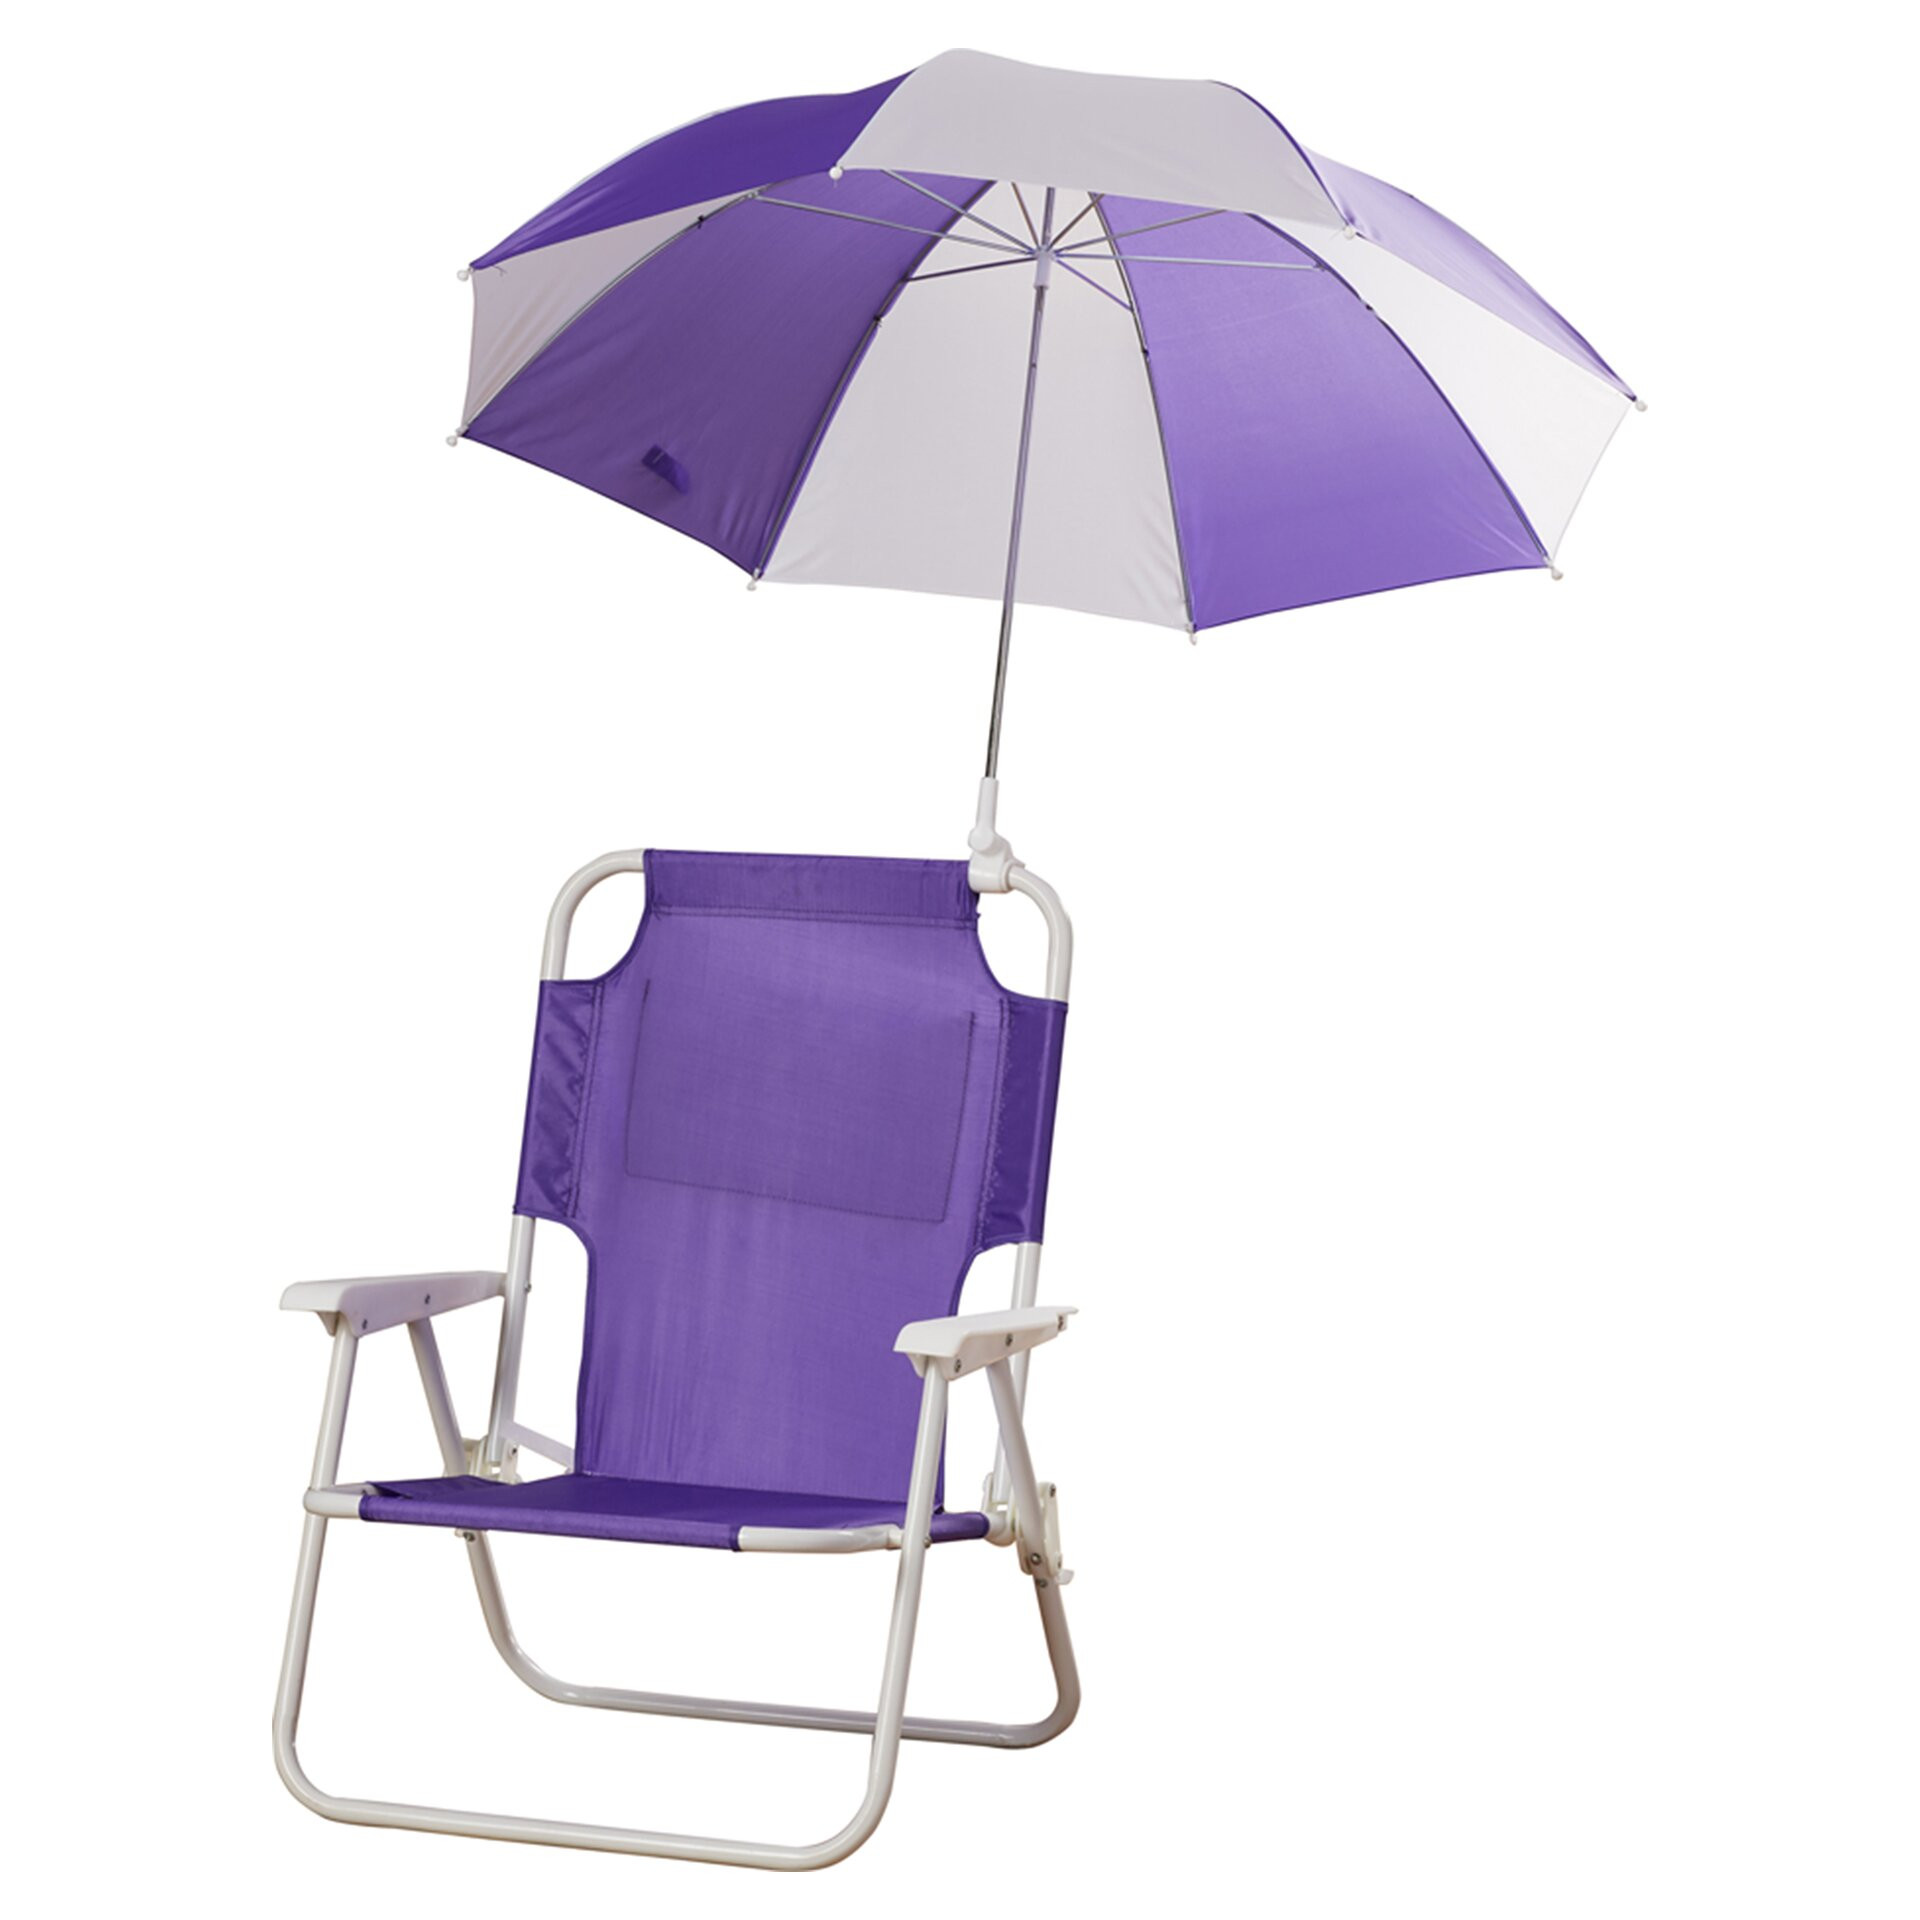 Kids Beach Chair With Umbrella
 Zoomie Kids Alexus Umbrella Kids Beach Chair & Reviews